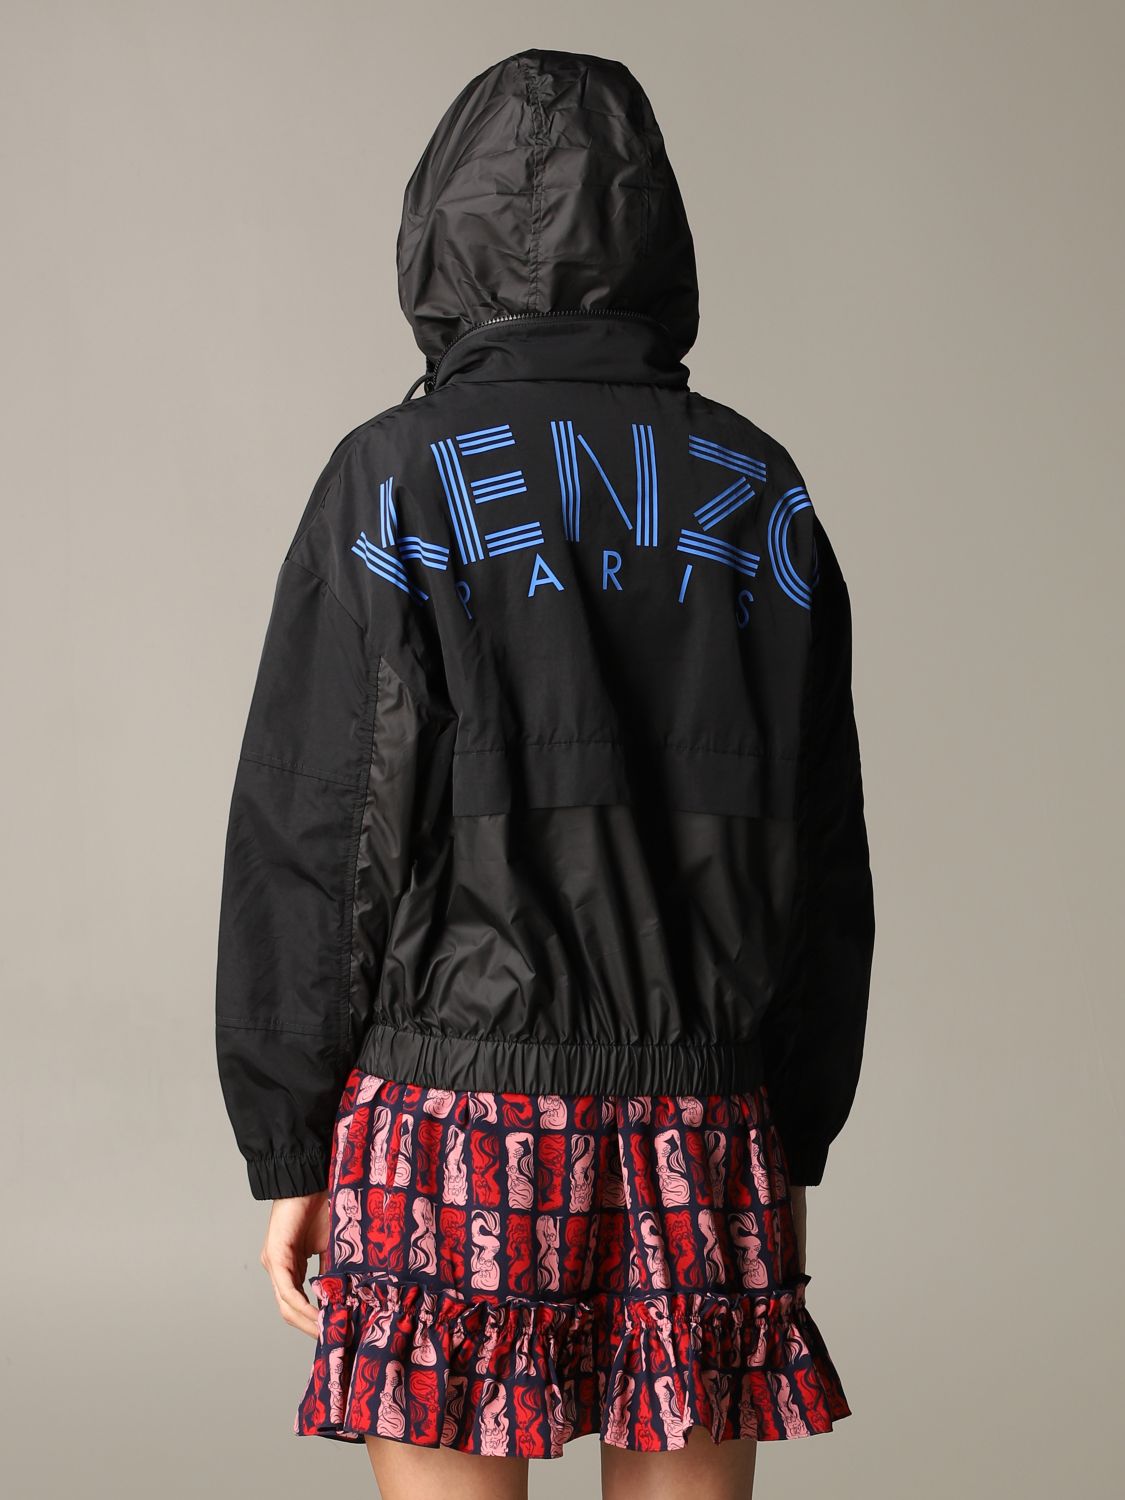 womens kenzo coat